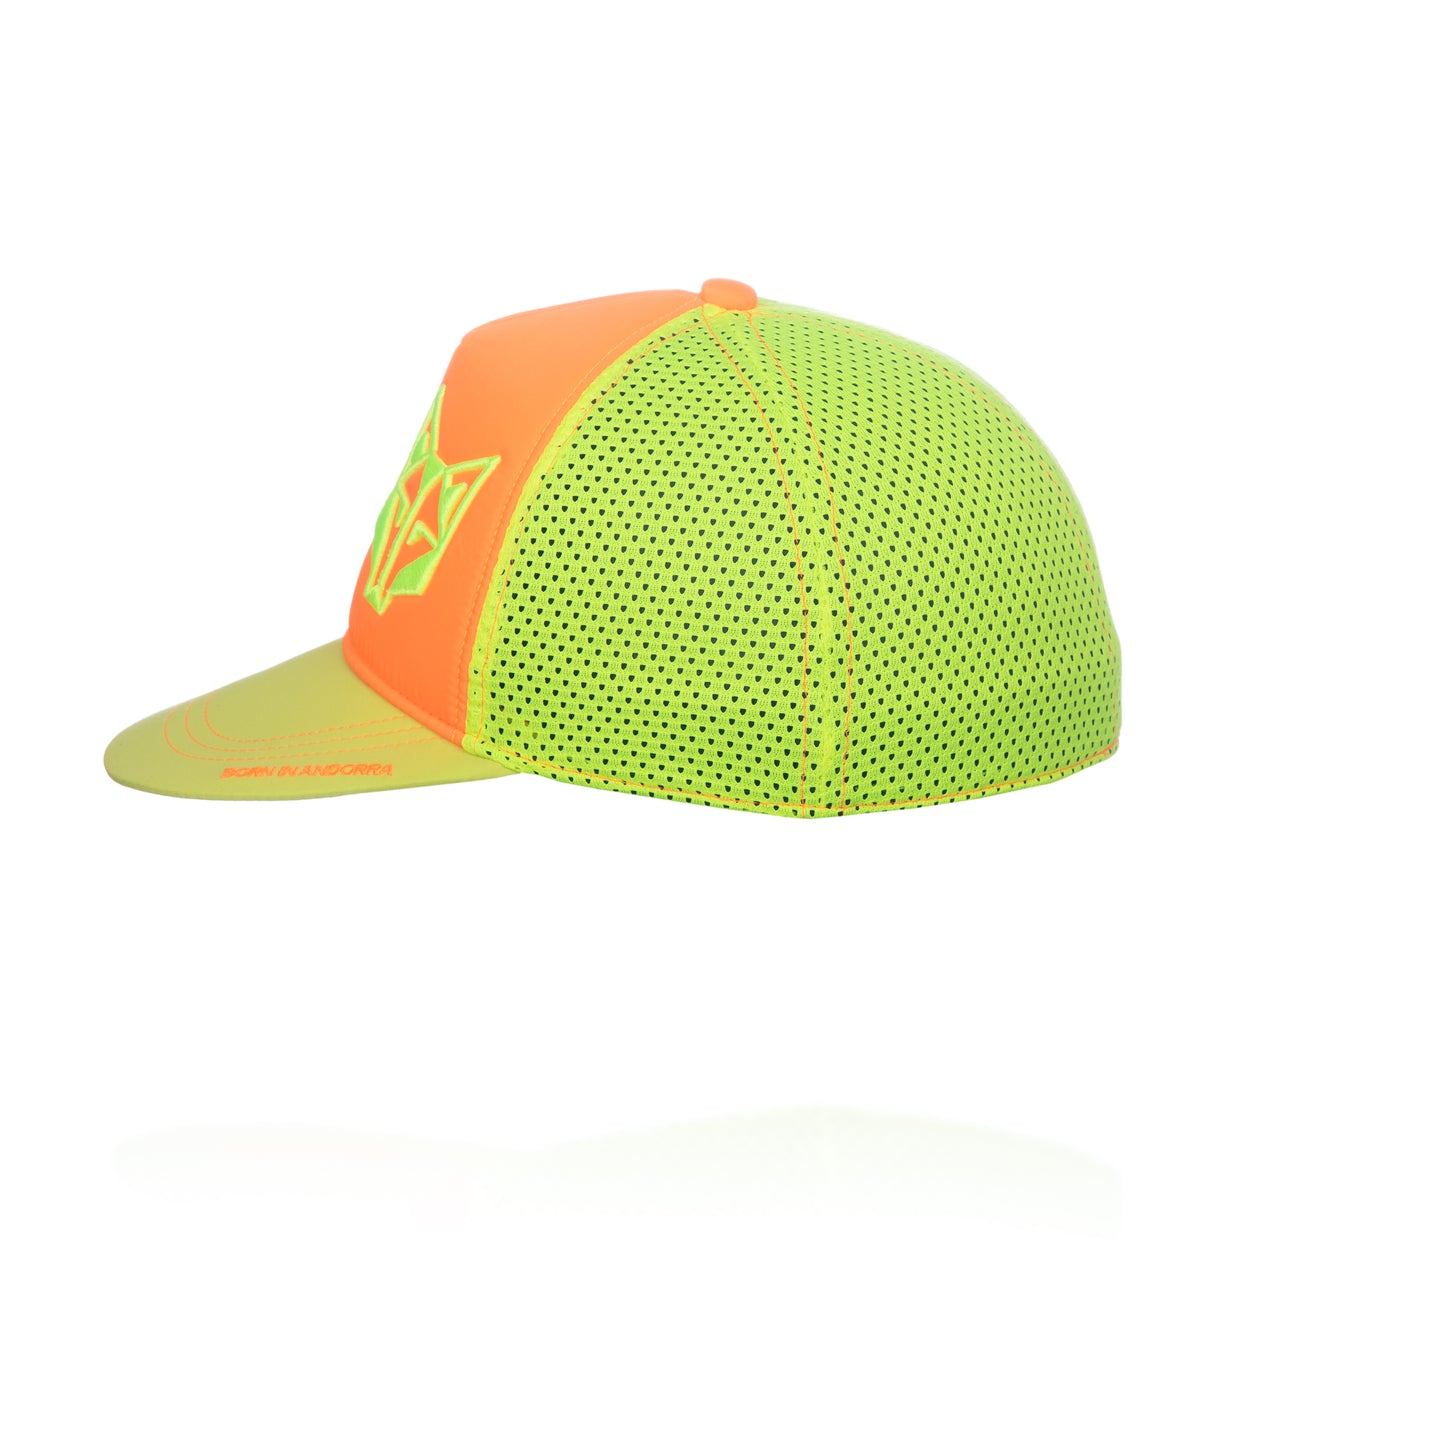 Gorra snapback - Fluo Orange & Fluo Yellow